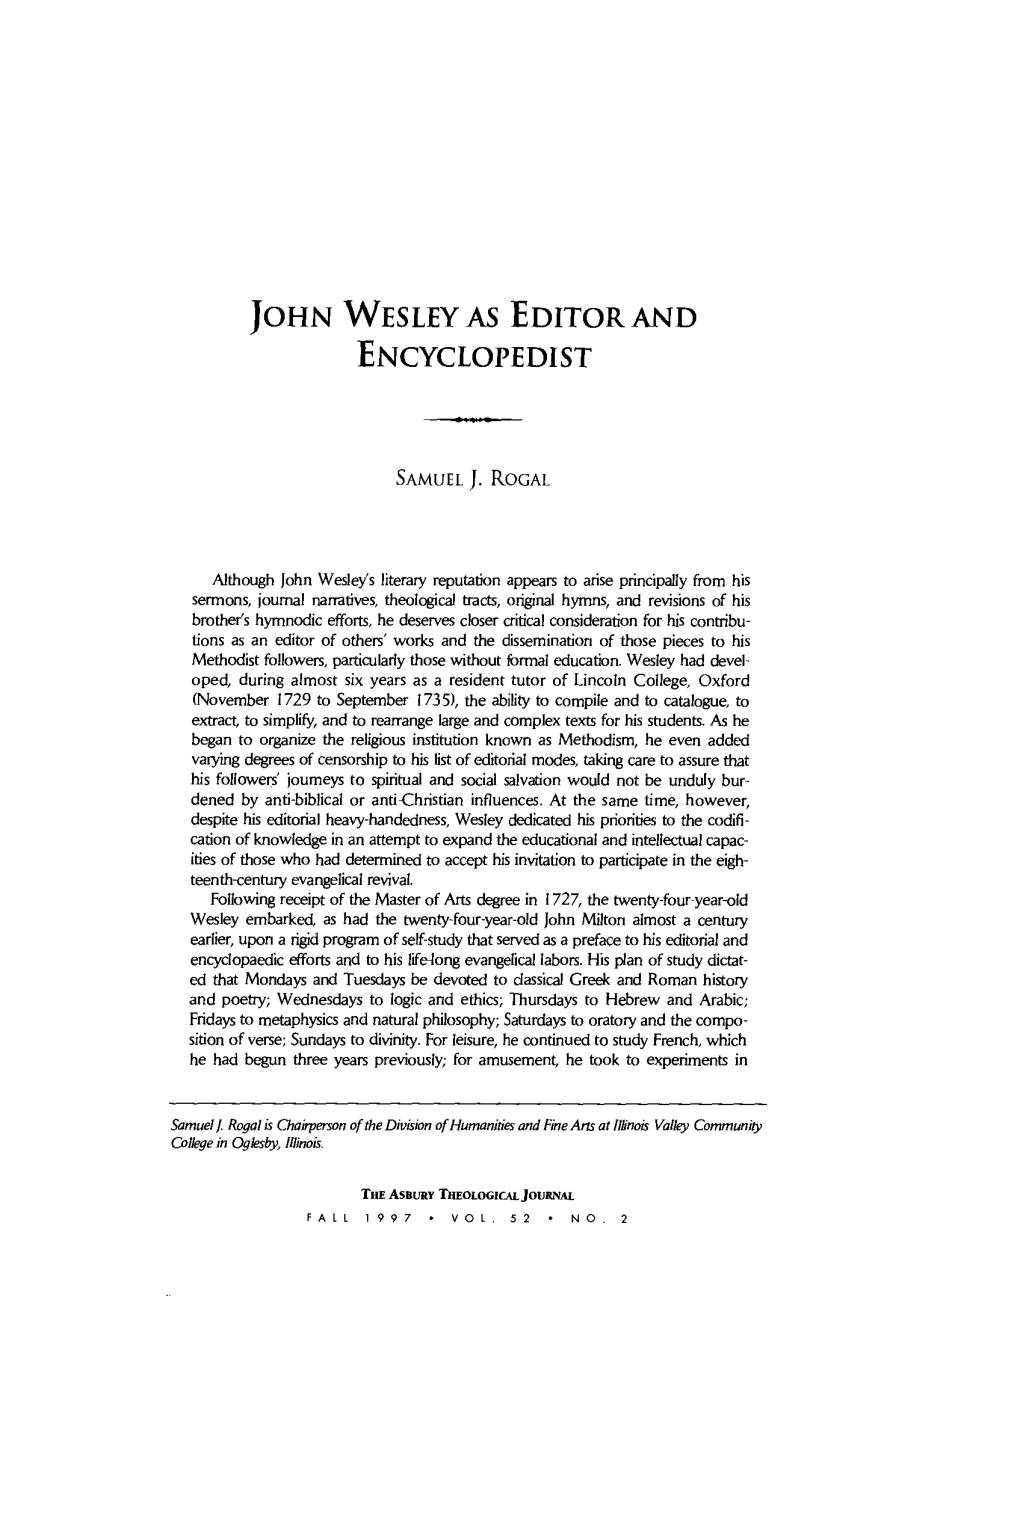 John Wesley As Editor and Encyclopedist